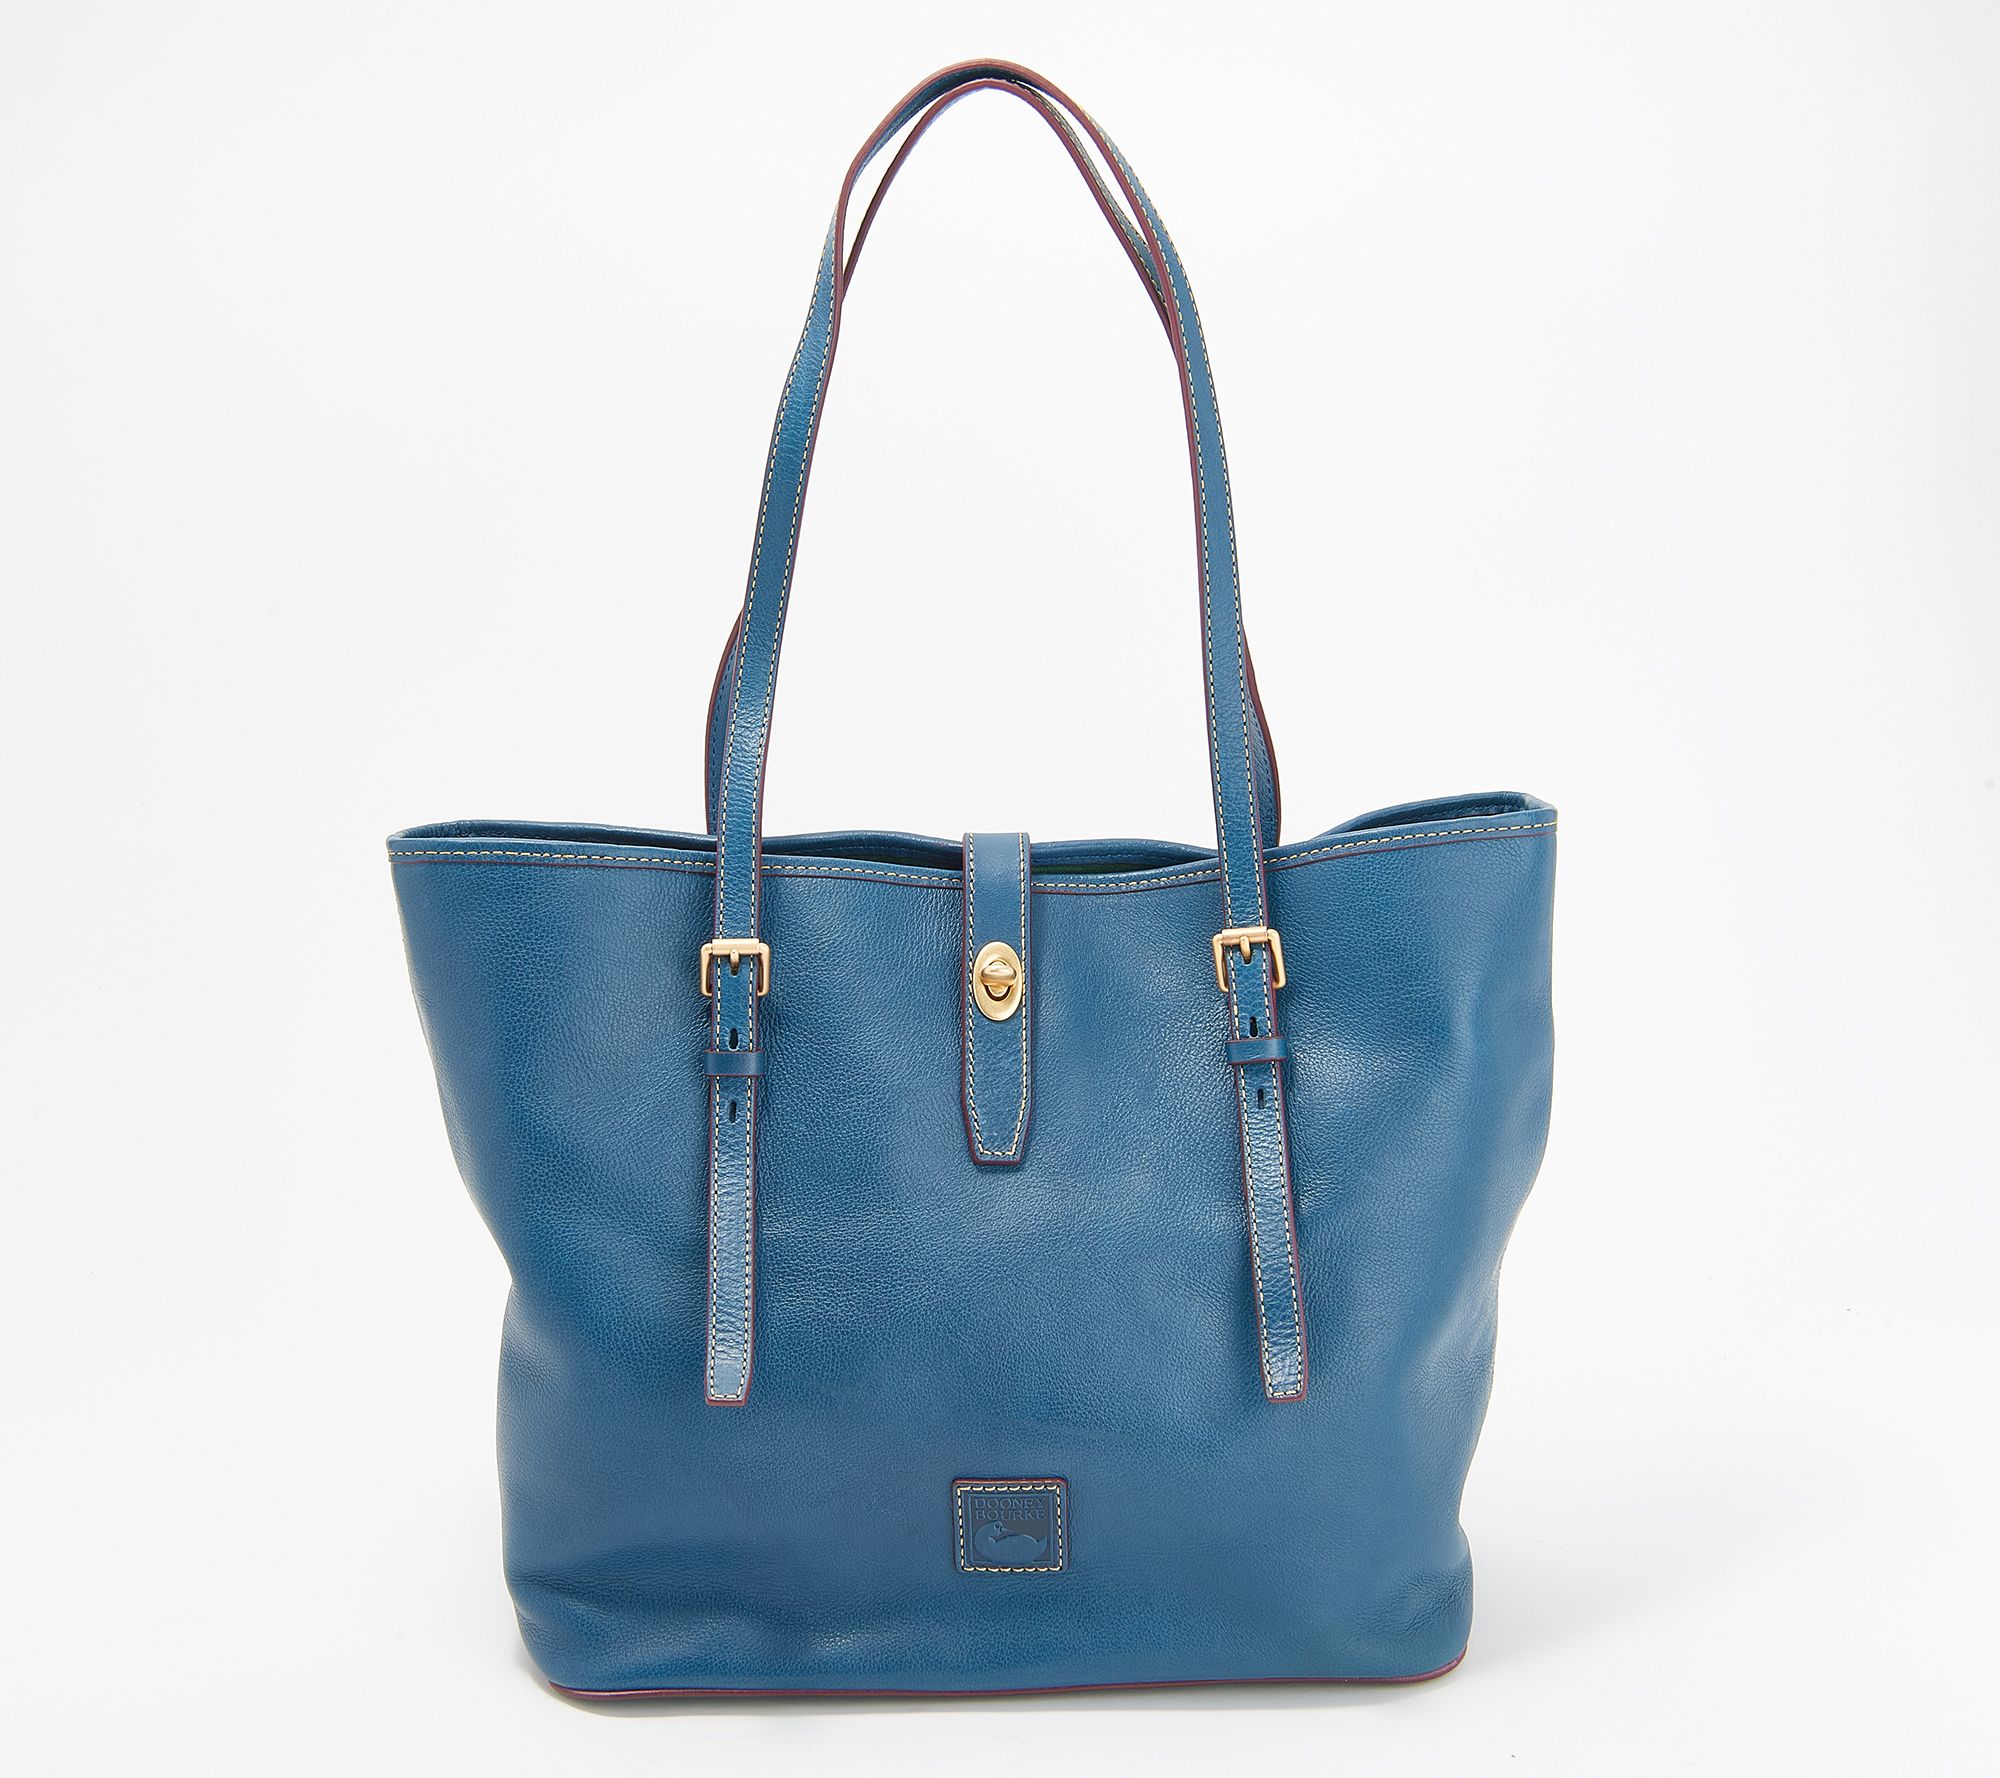 Dooney & Bourke Patent Leather Tote Handbag- Janie on QVC 